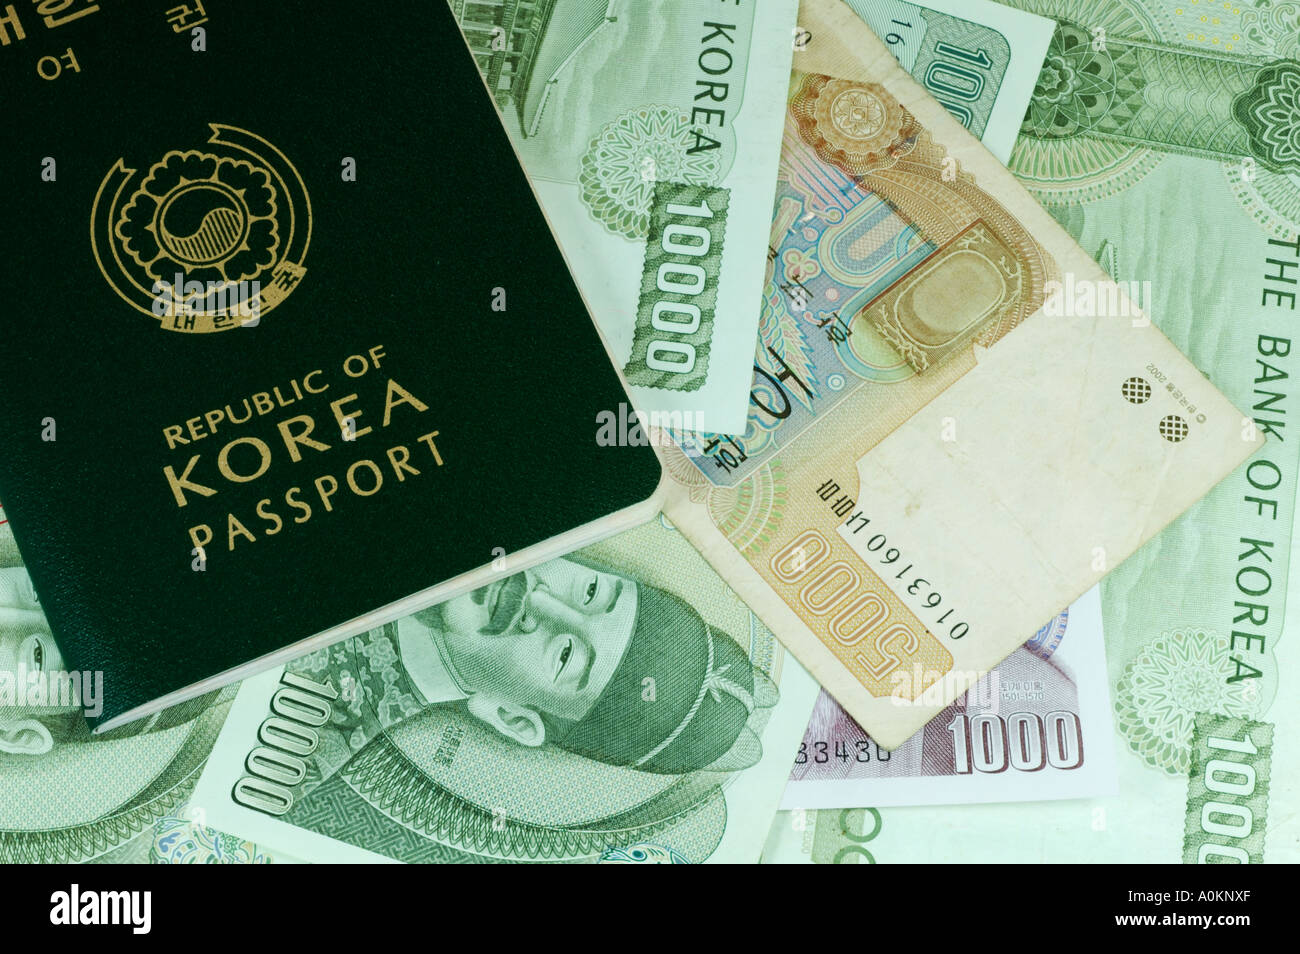 Korean passport and Korean currency Stock Photo